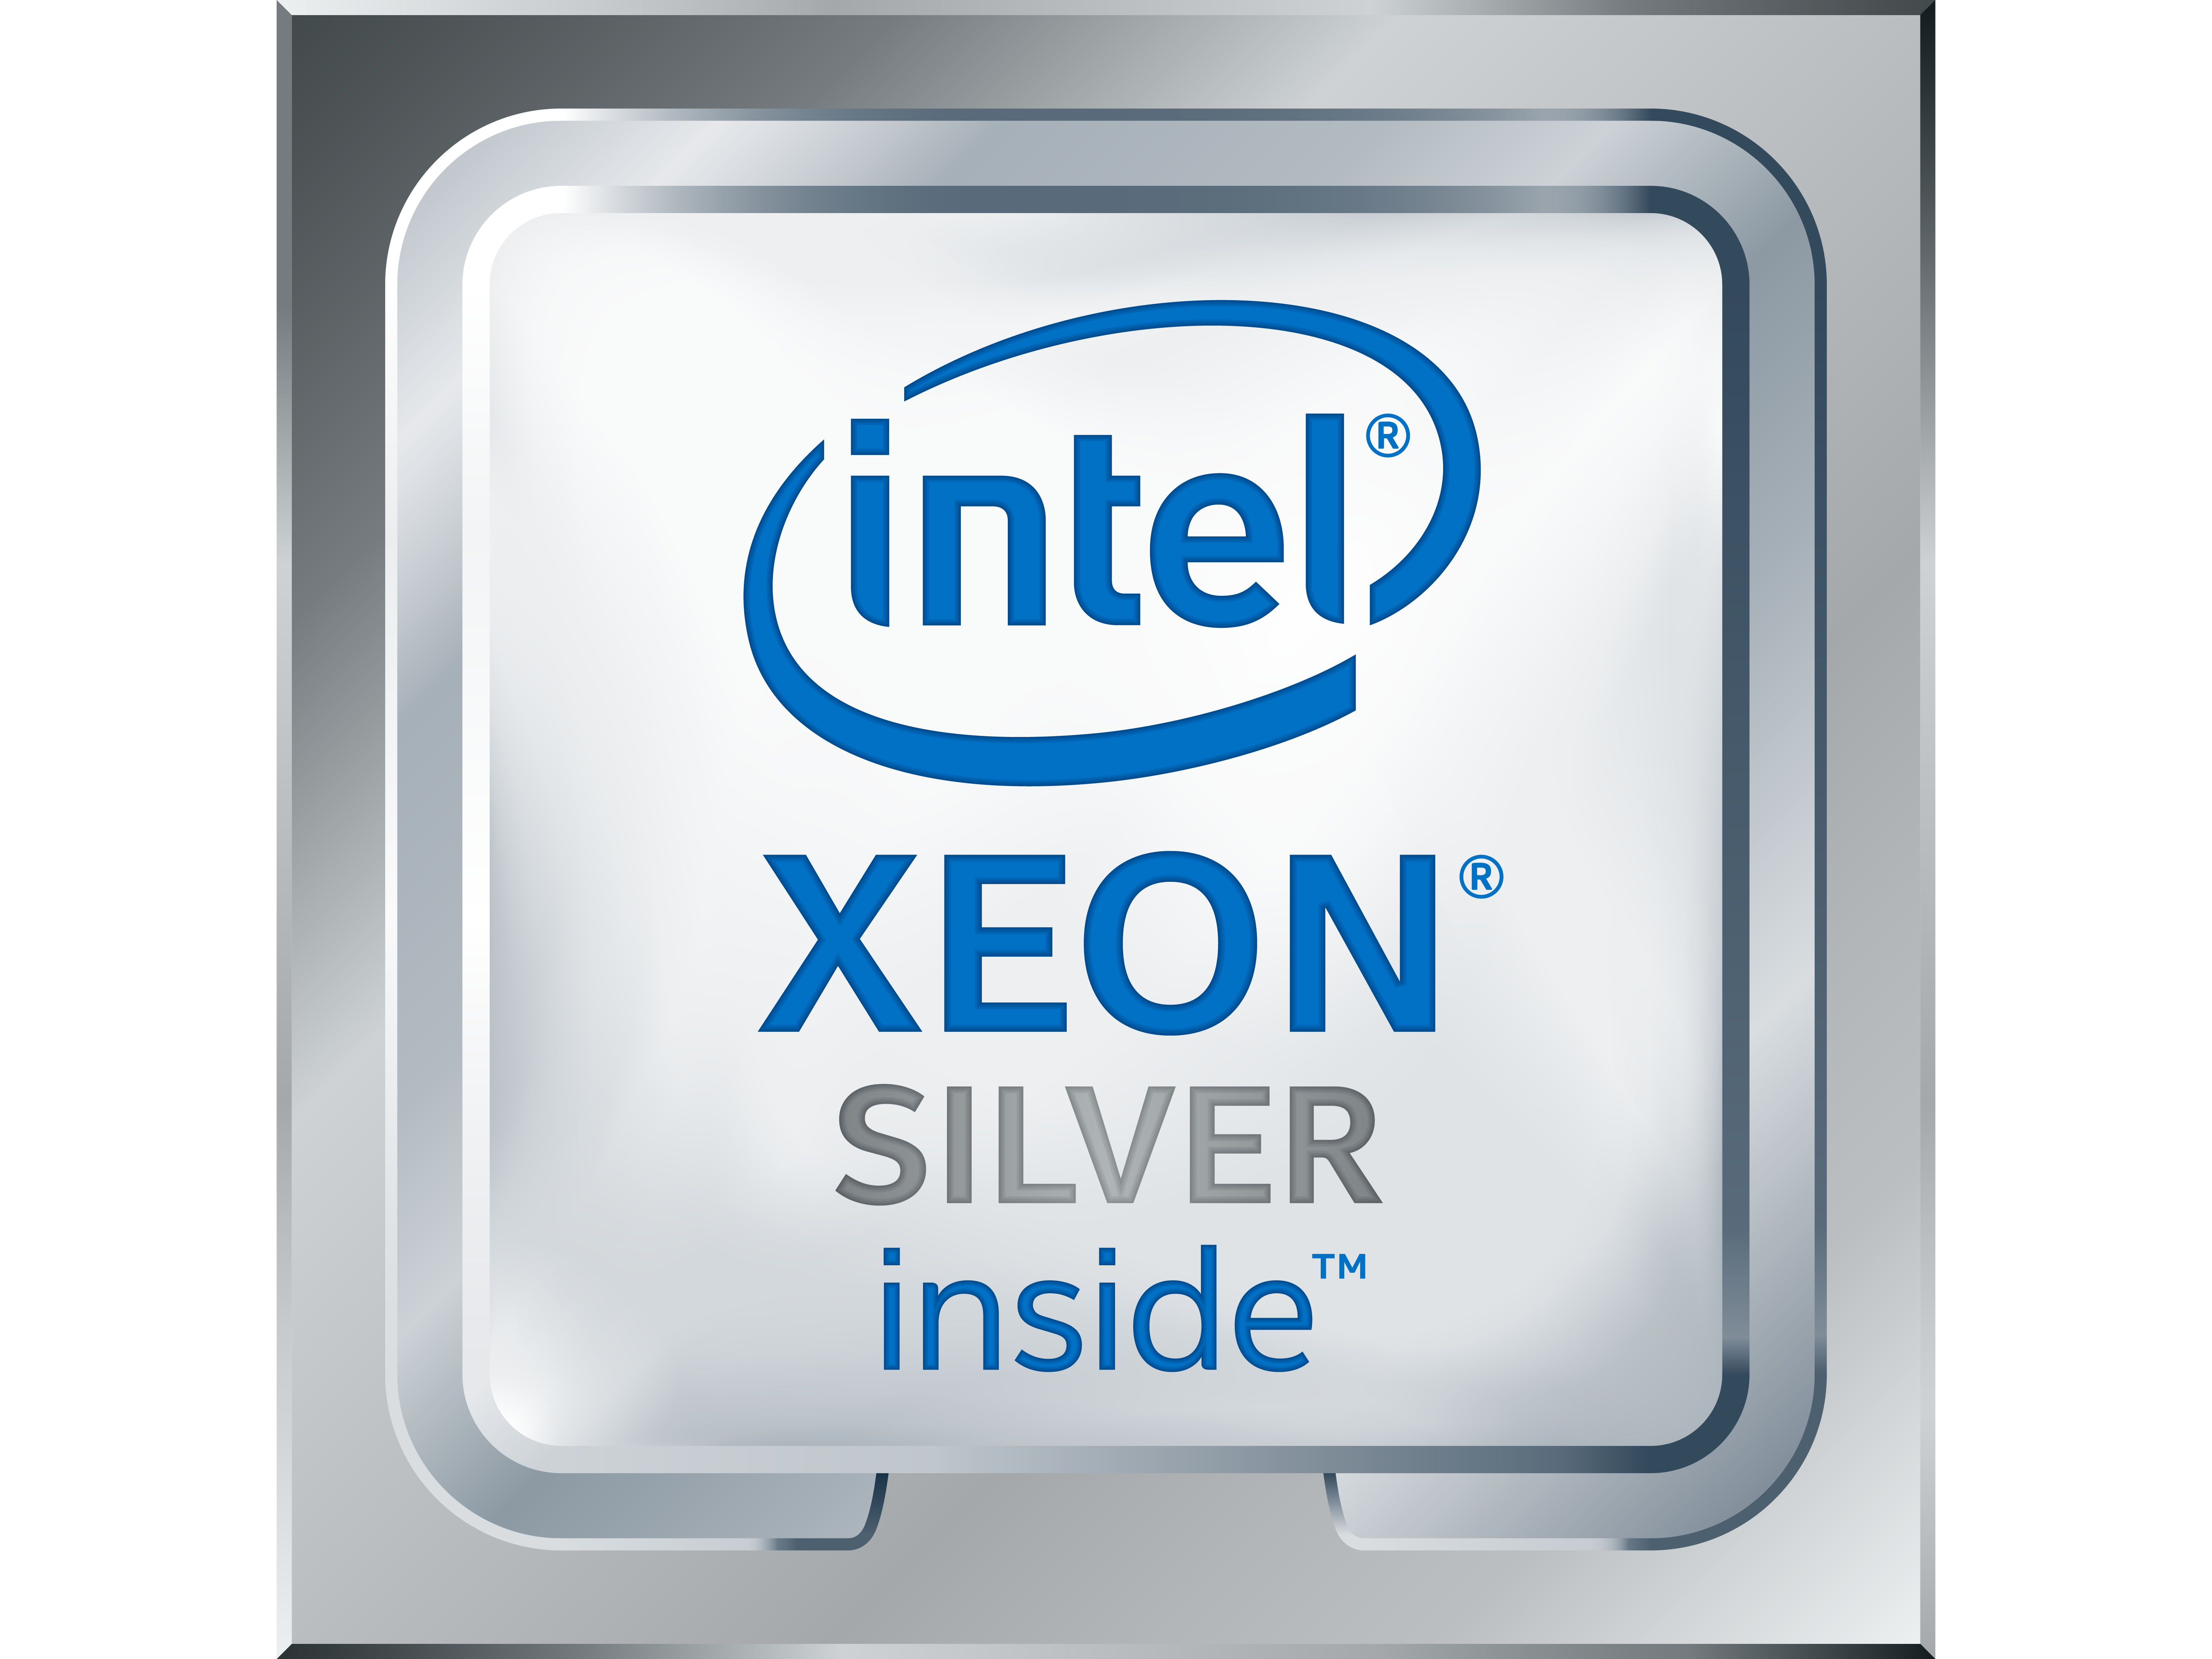 boezem Deens stopverf Intel Xeon Silver 4110 Processor 11M Cache 2.10 GHz Product Specifications